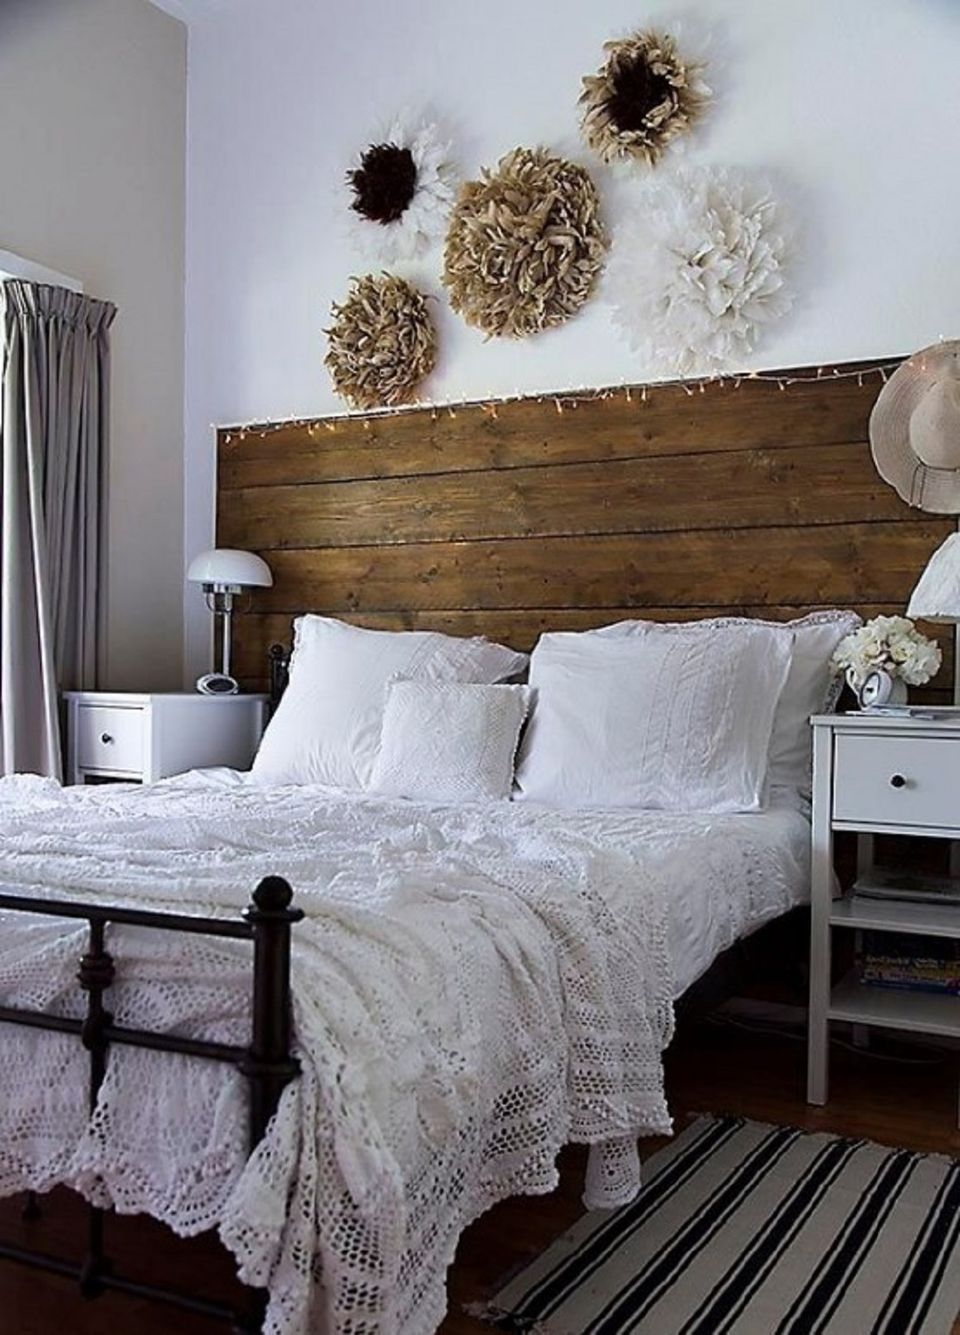 New Retro Bedroom Ideas with Simple Decor